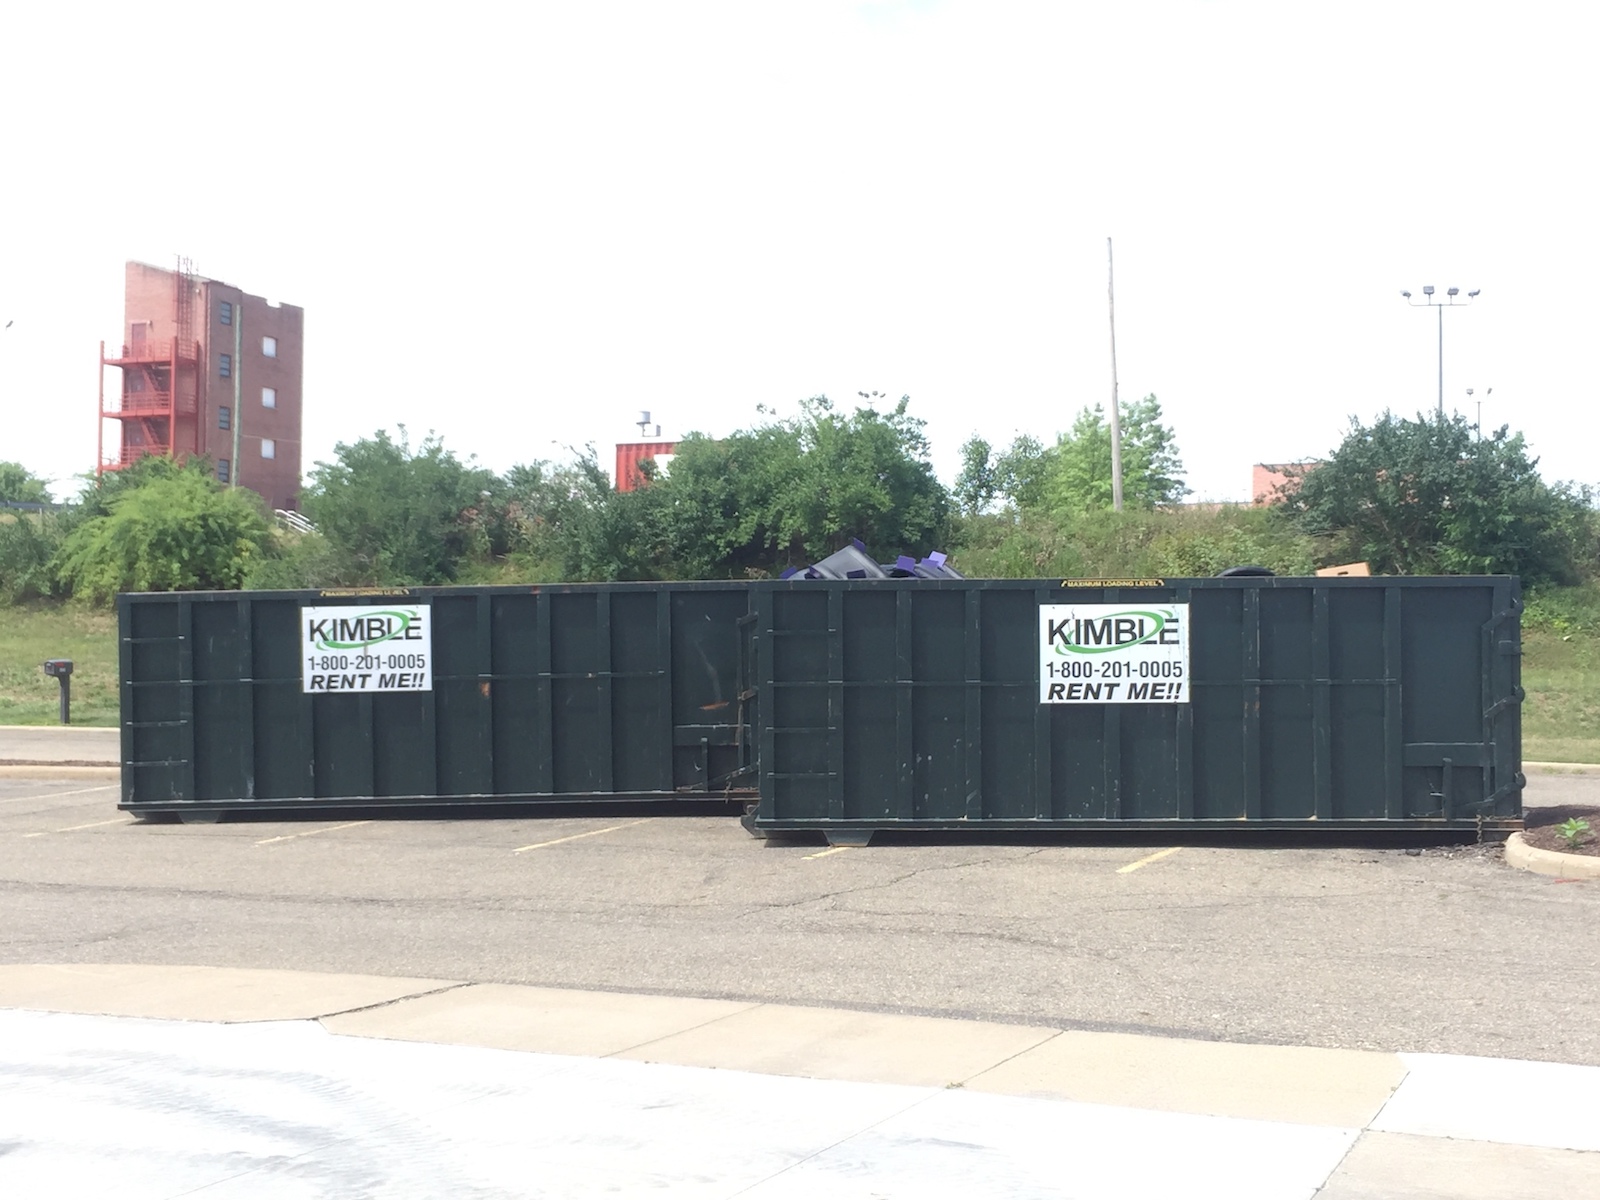 Kimble Dumpsters for Construction Site